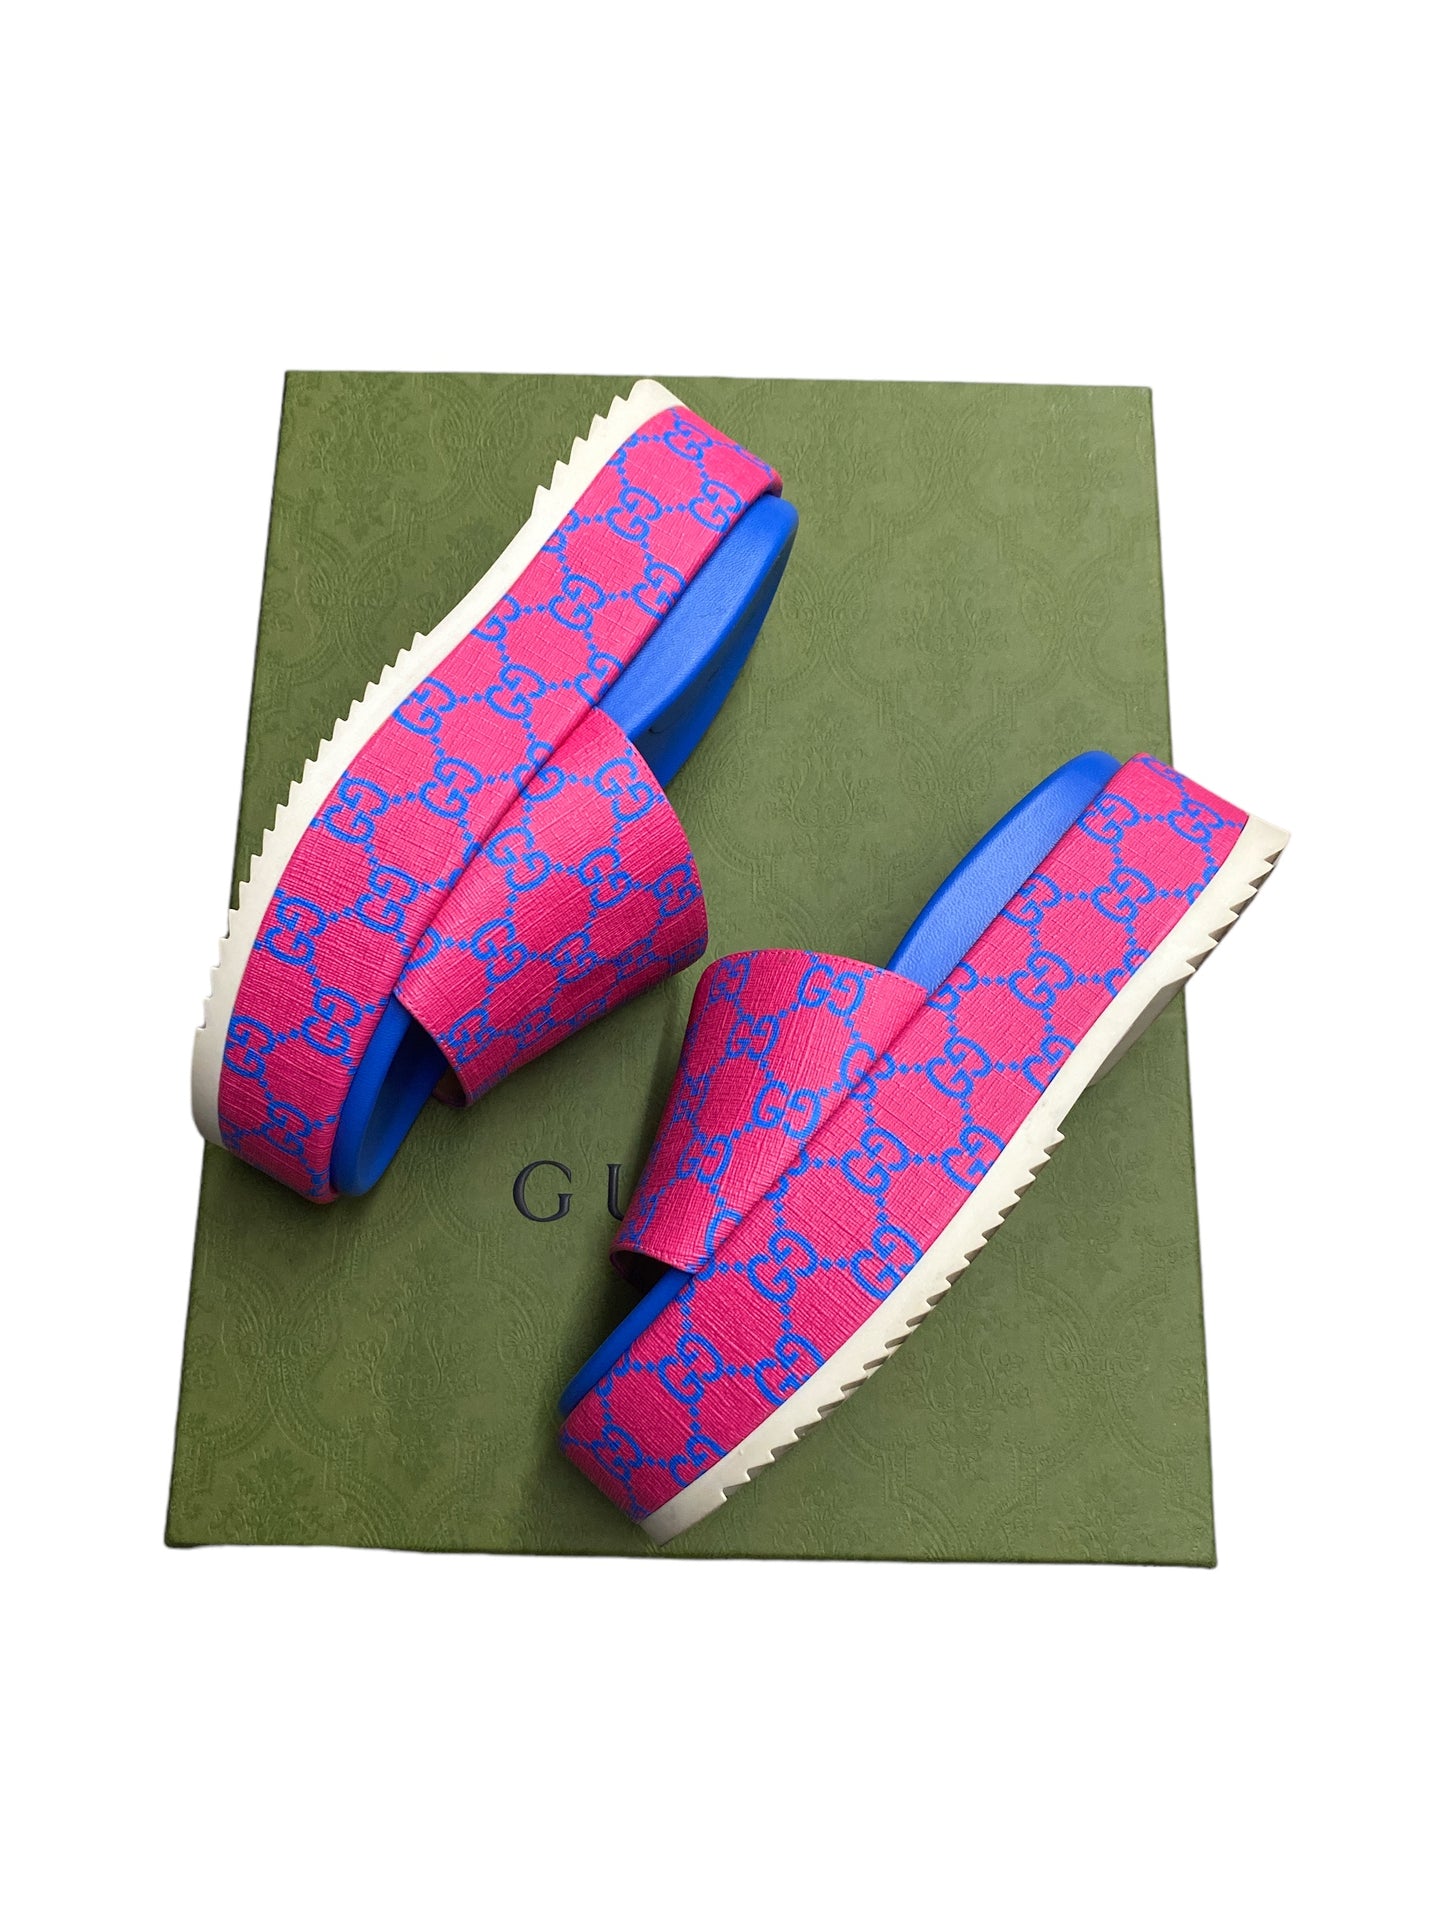 Sandals Luxury Designer By Gucci Size:34.5